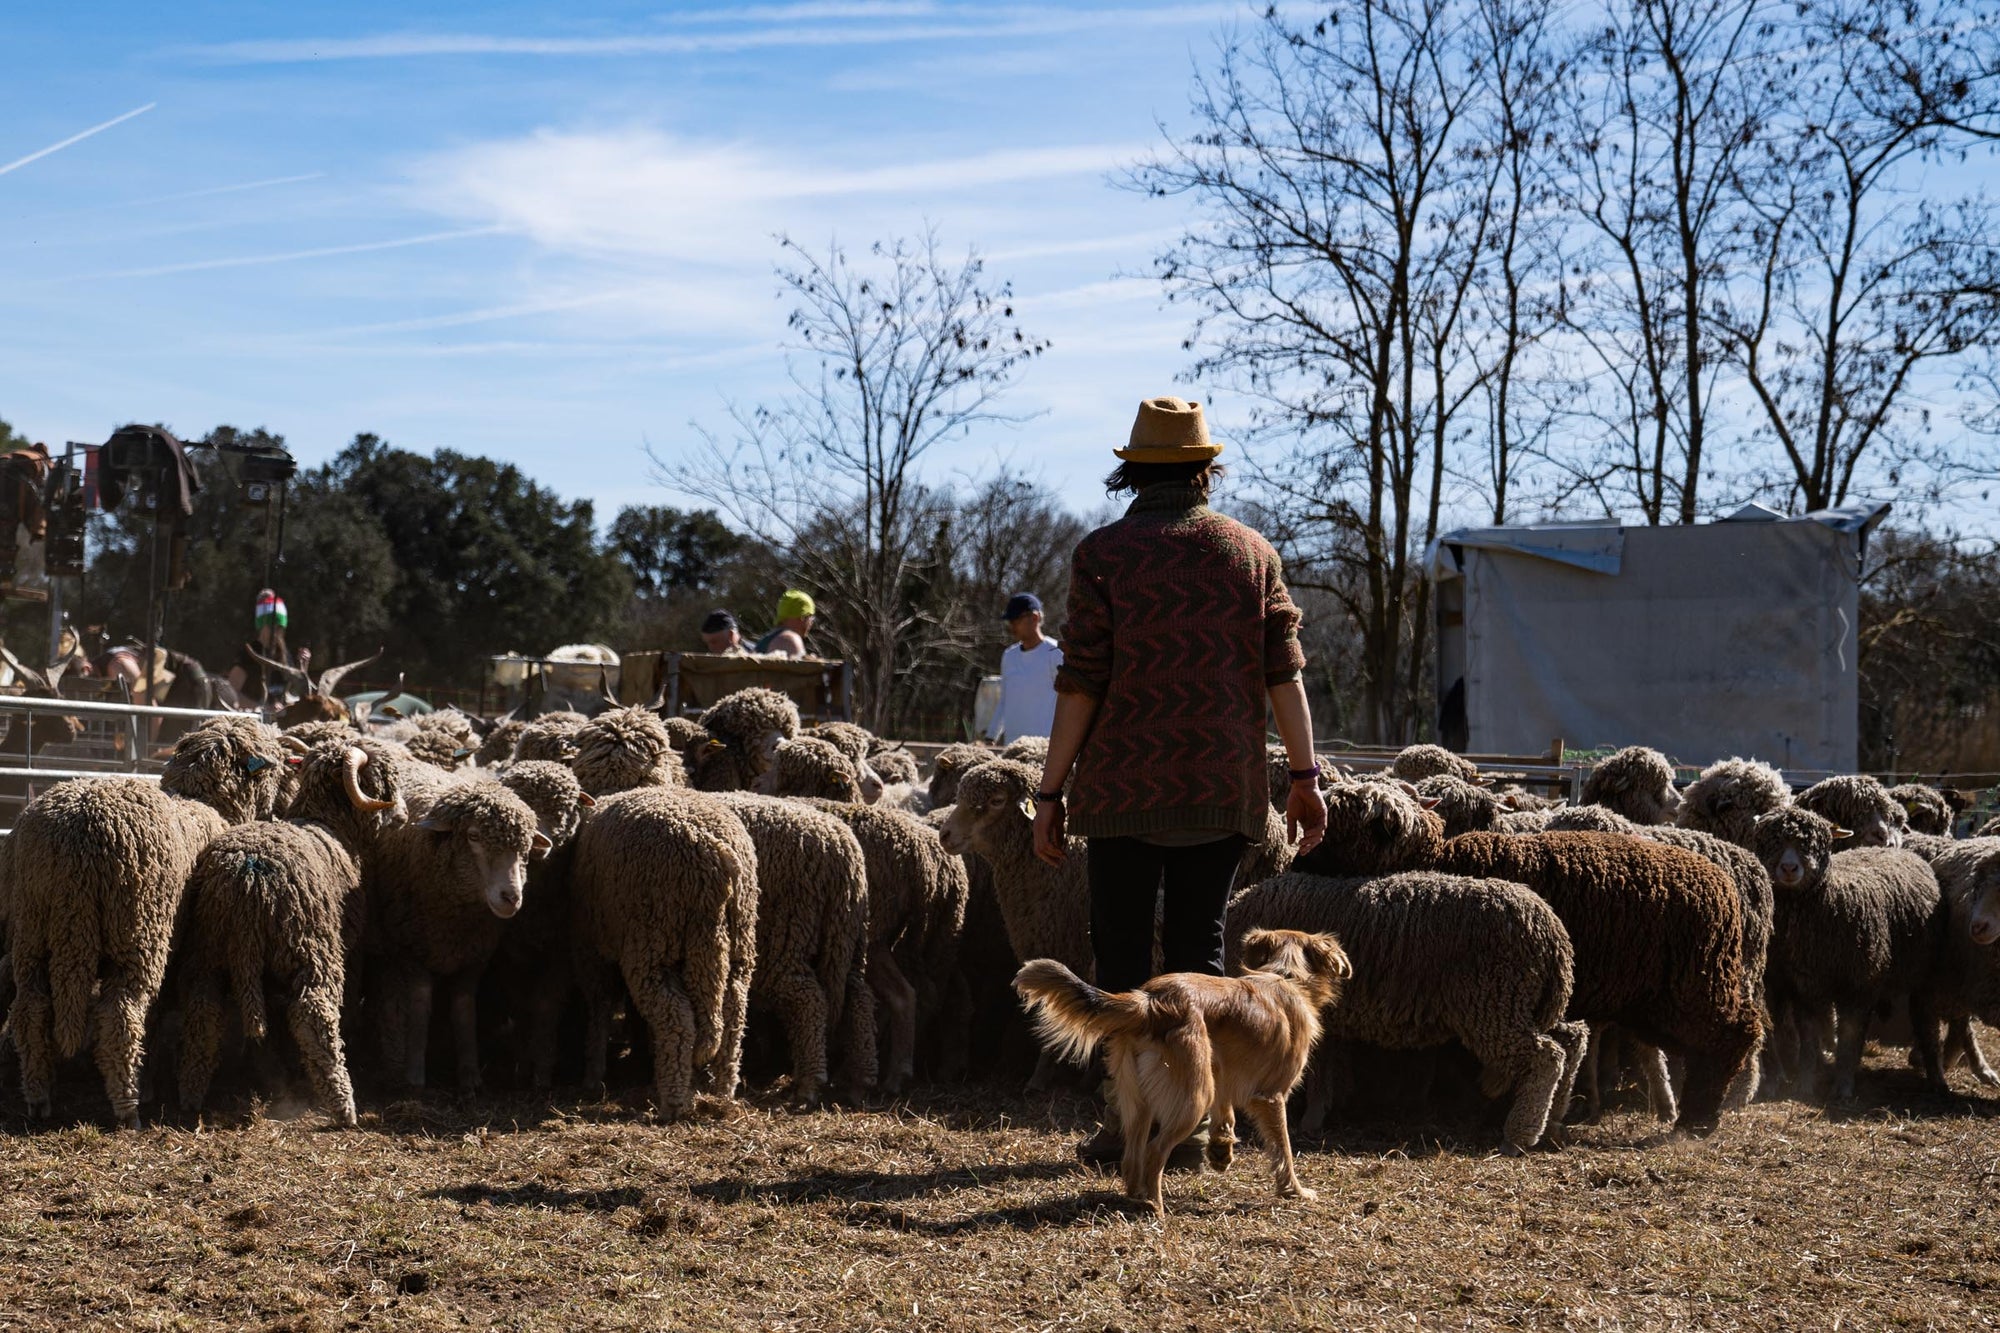 A shepherd guiding her Merino d'Arles sheep into a pen for shearing.